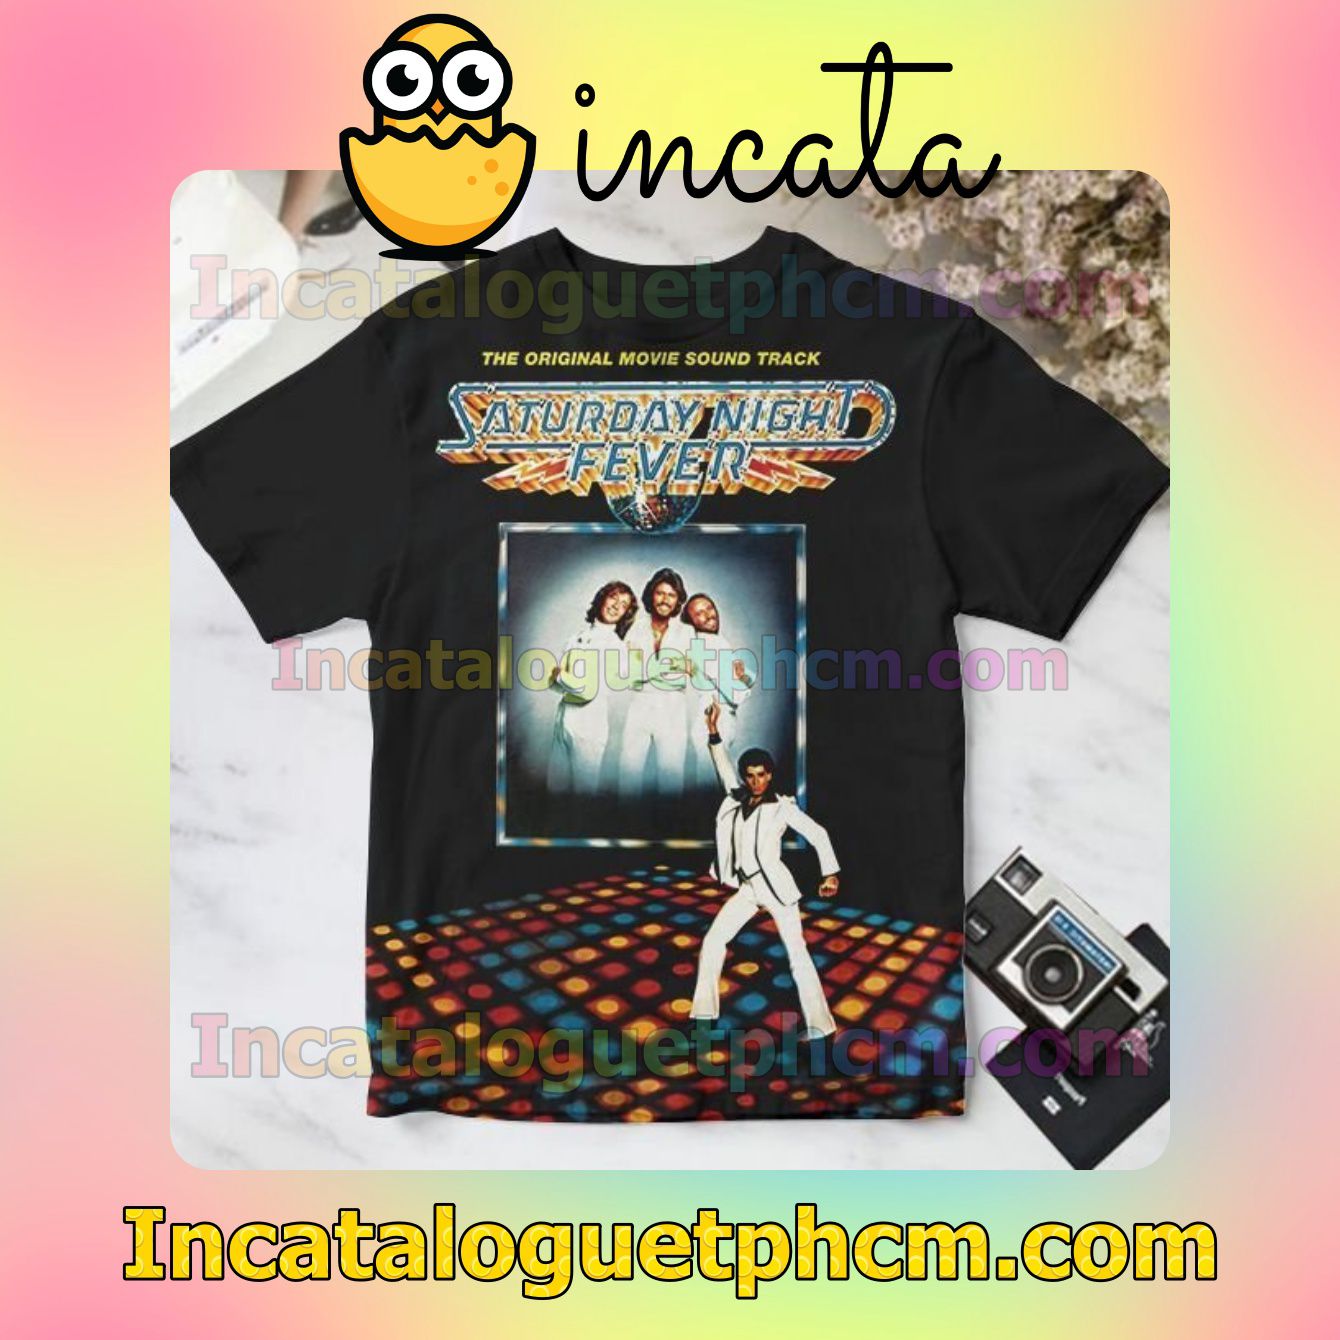 Saturday Night Fever Soundtrack Album Cover Personalized Shirt